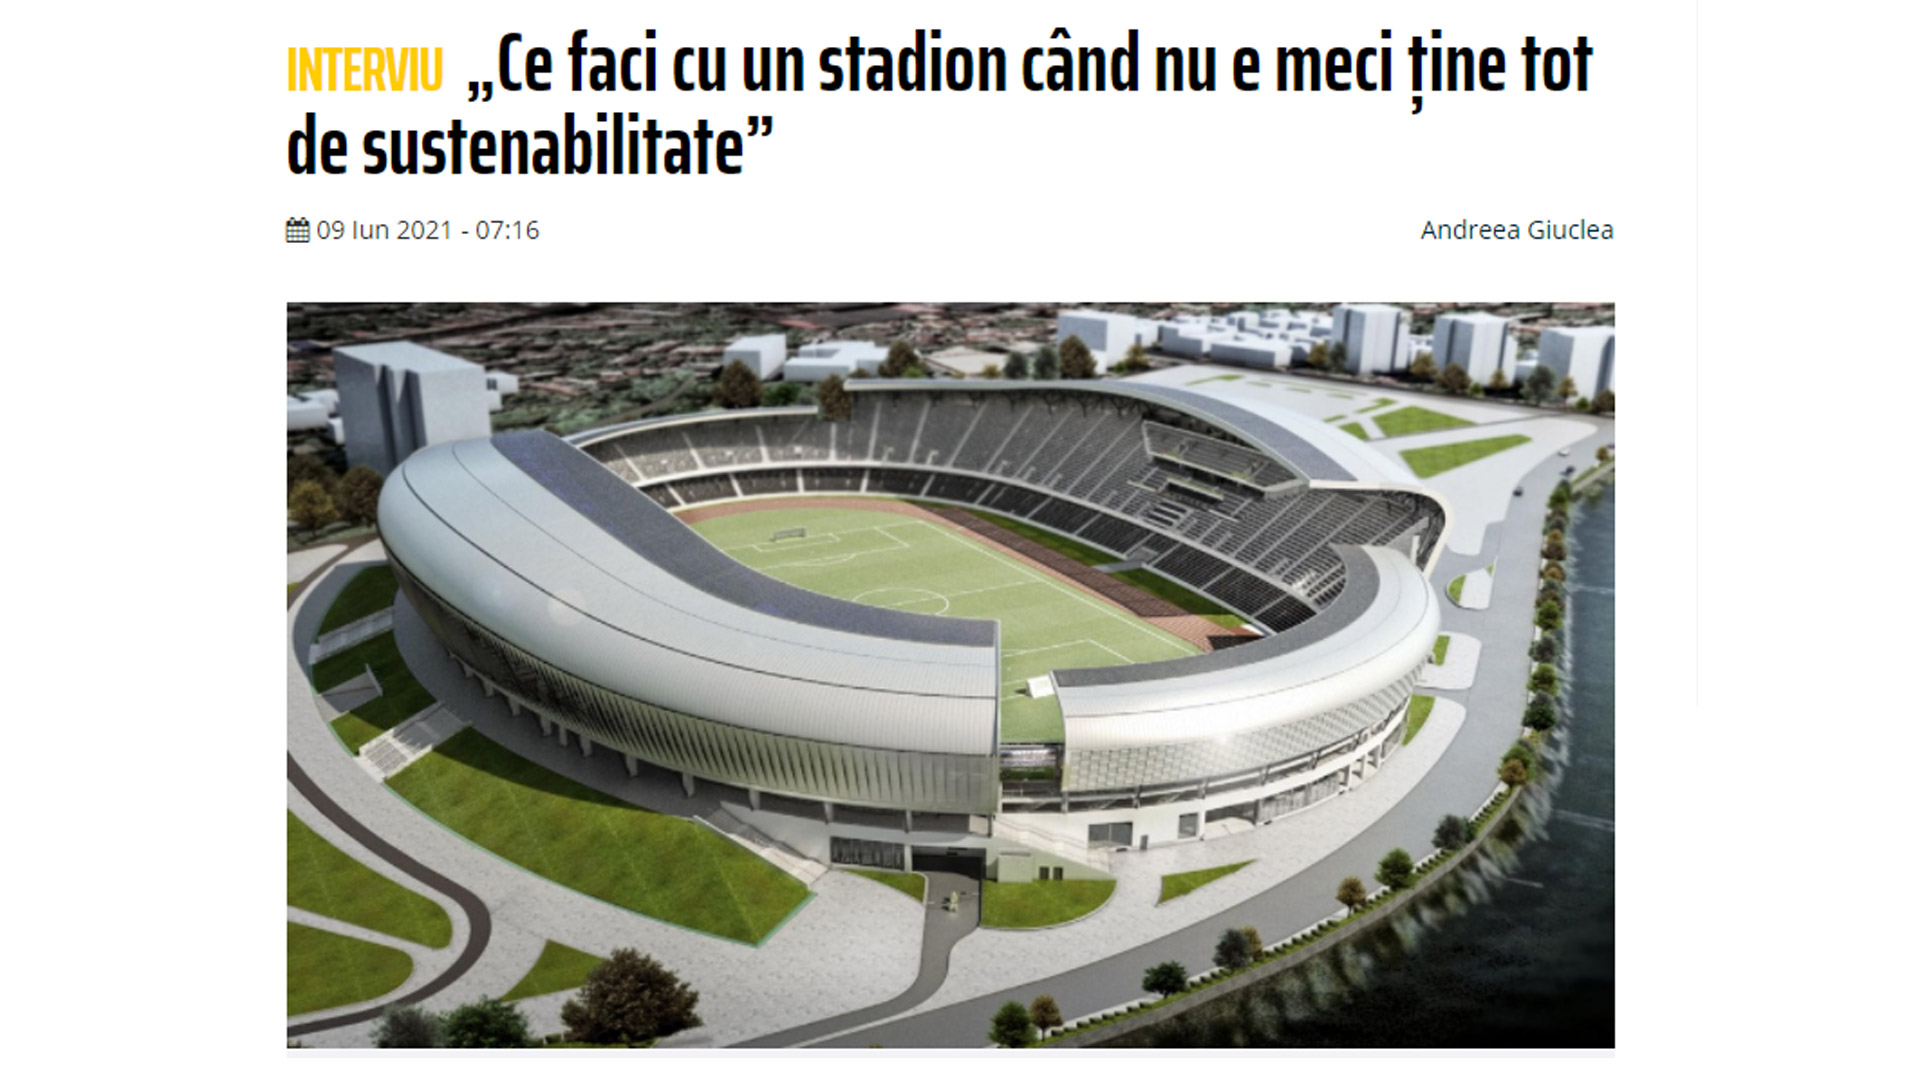 Interview, Sustainability in stadium construction, 2021